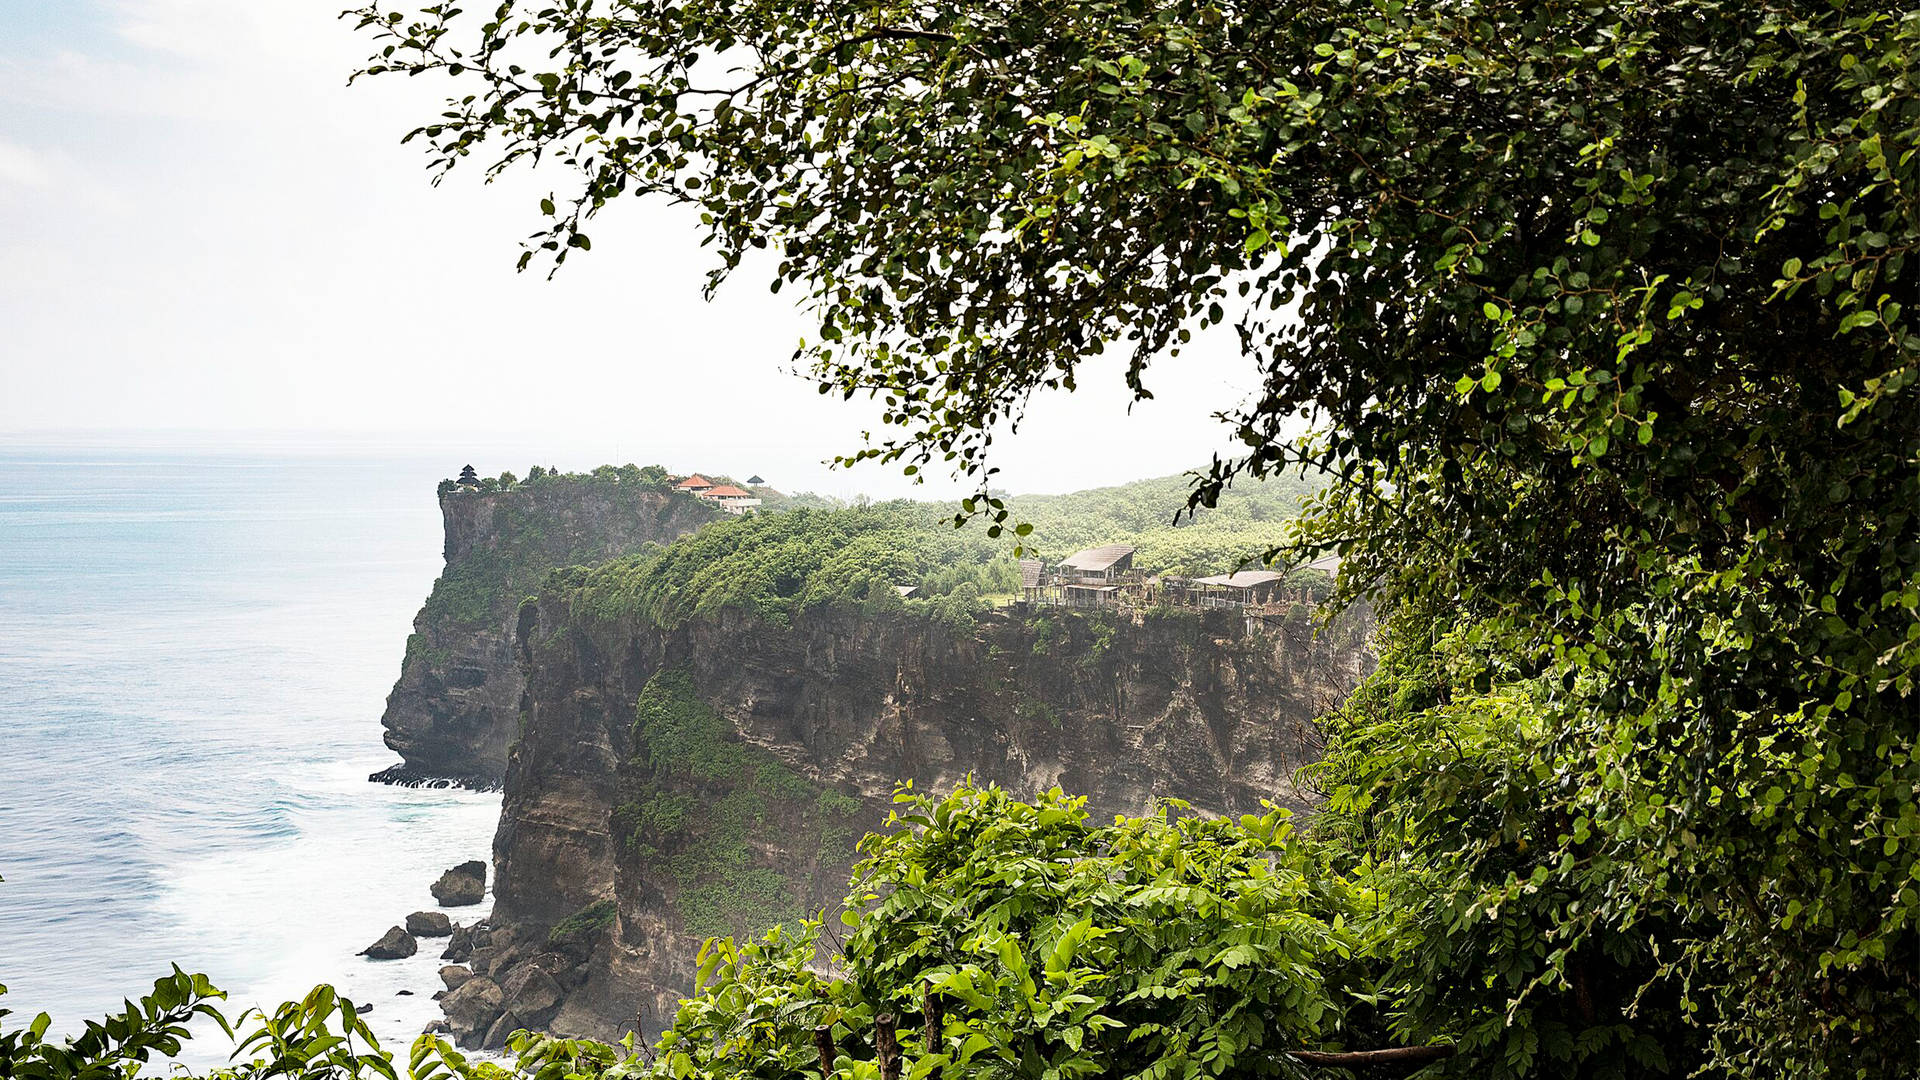 Cliffs along the coast in Bali